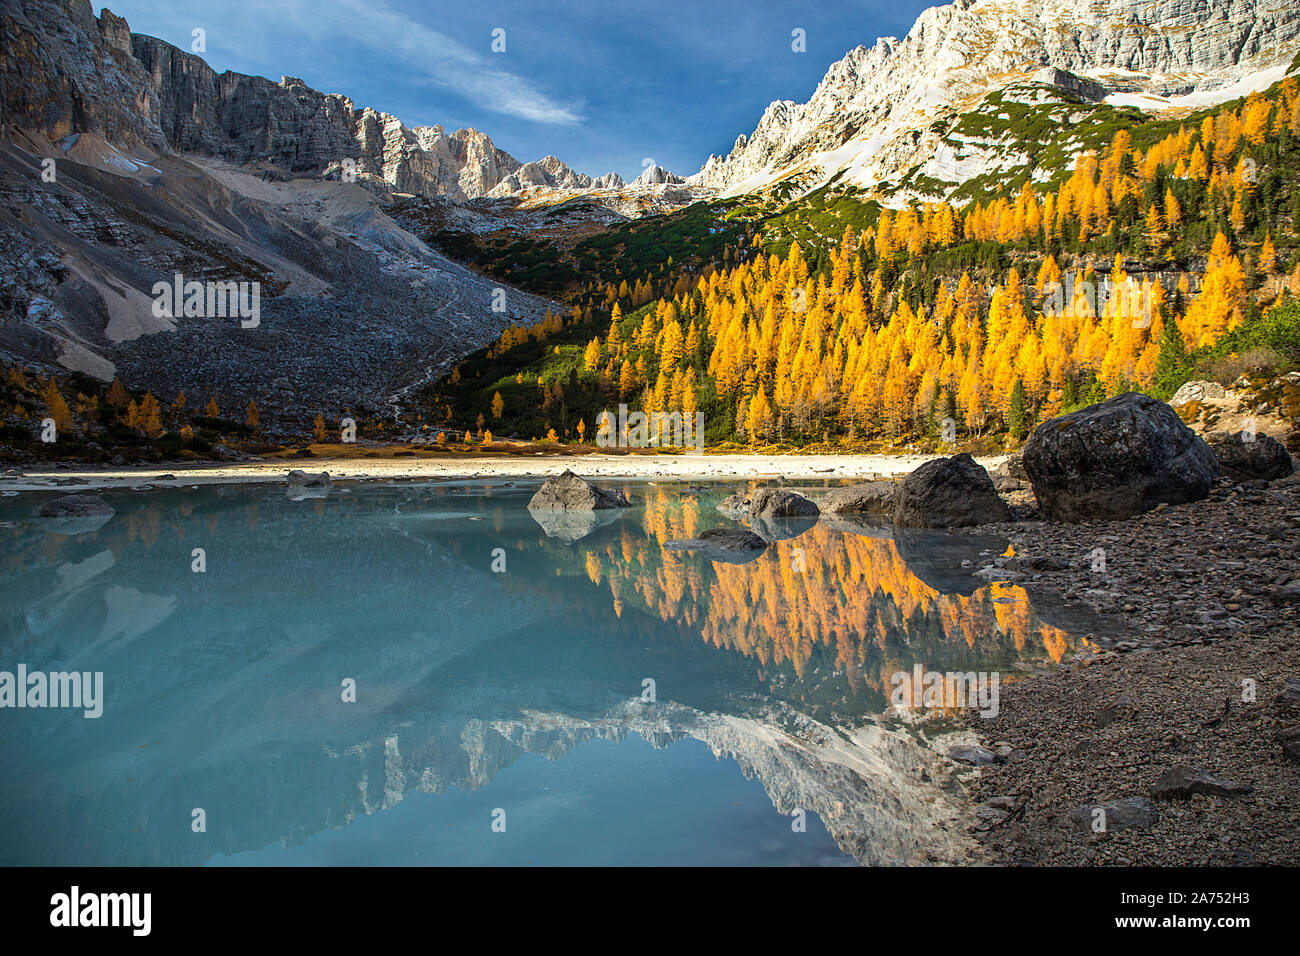 Turquoise Sorapis Lake near Cortina d'Ampezzo, with Dolomite Mountains and Forest - Sorapis Circuit, Dolomites, Italy, Europe, autumn picture. Stock Photo